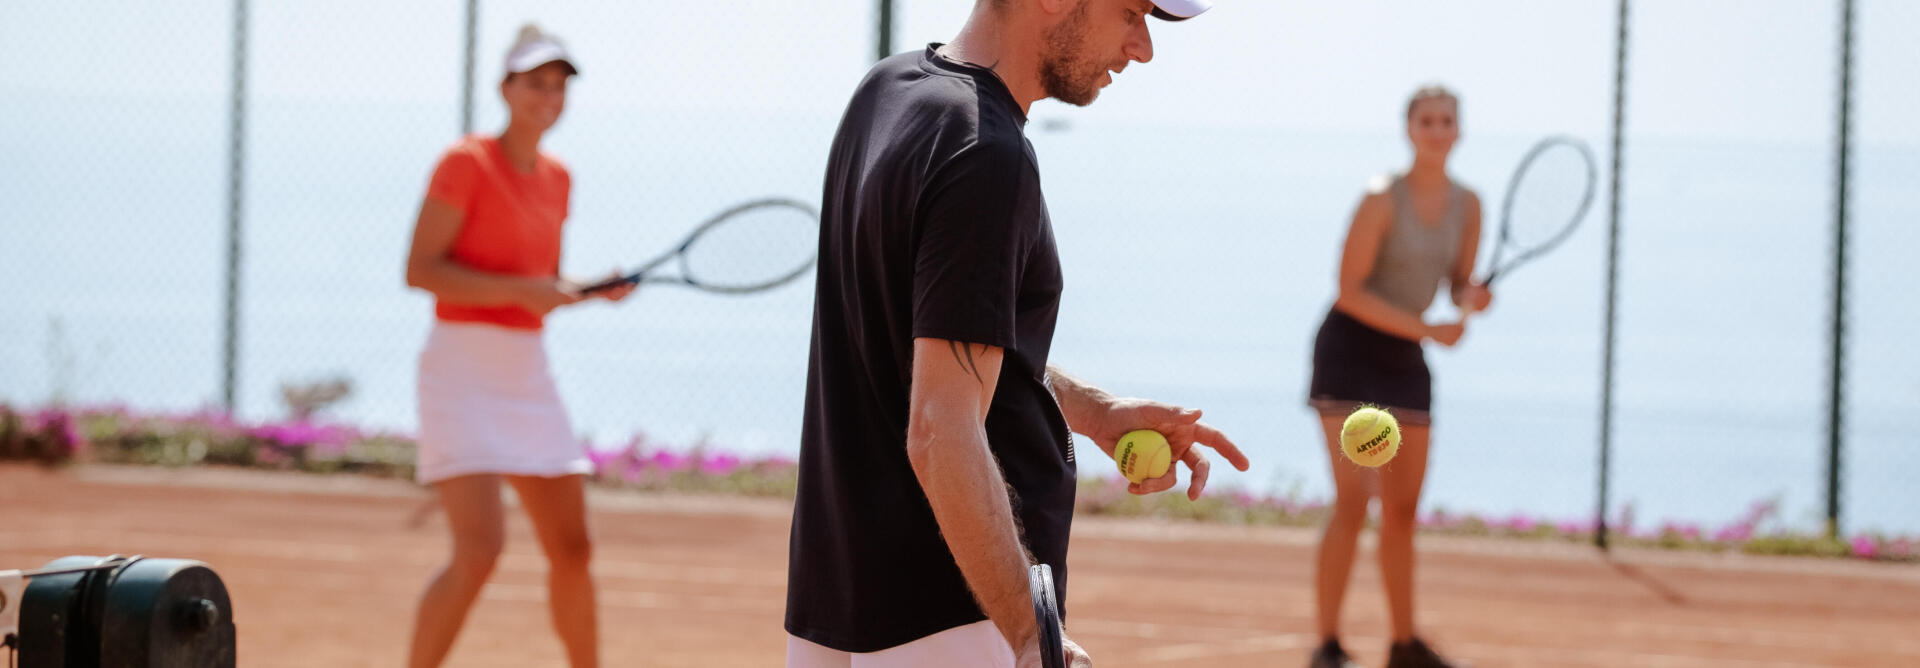 Tennis skills: the underarm serve